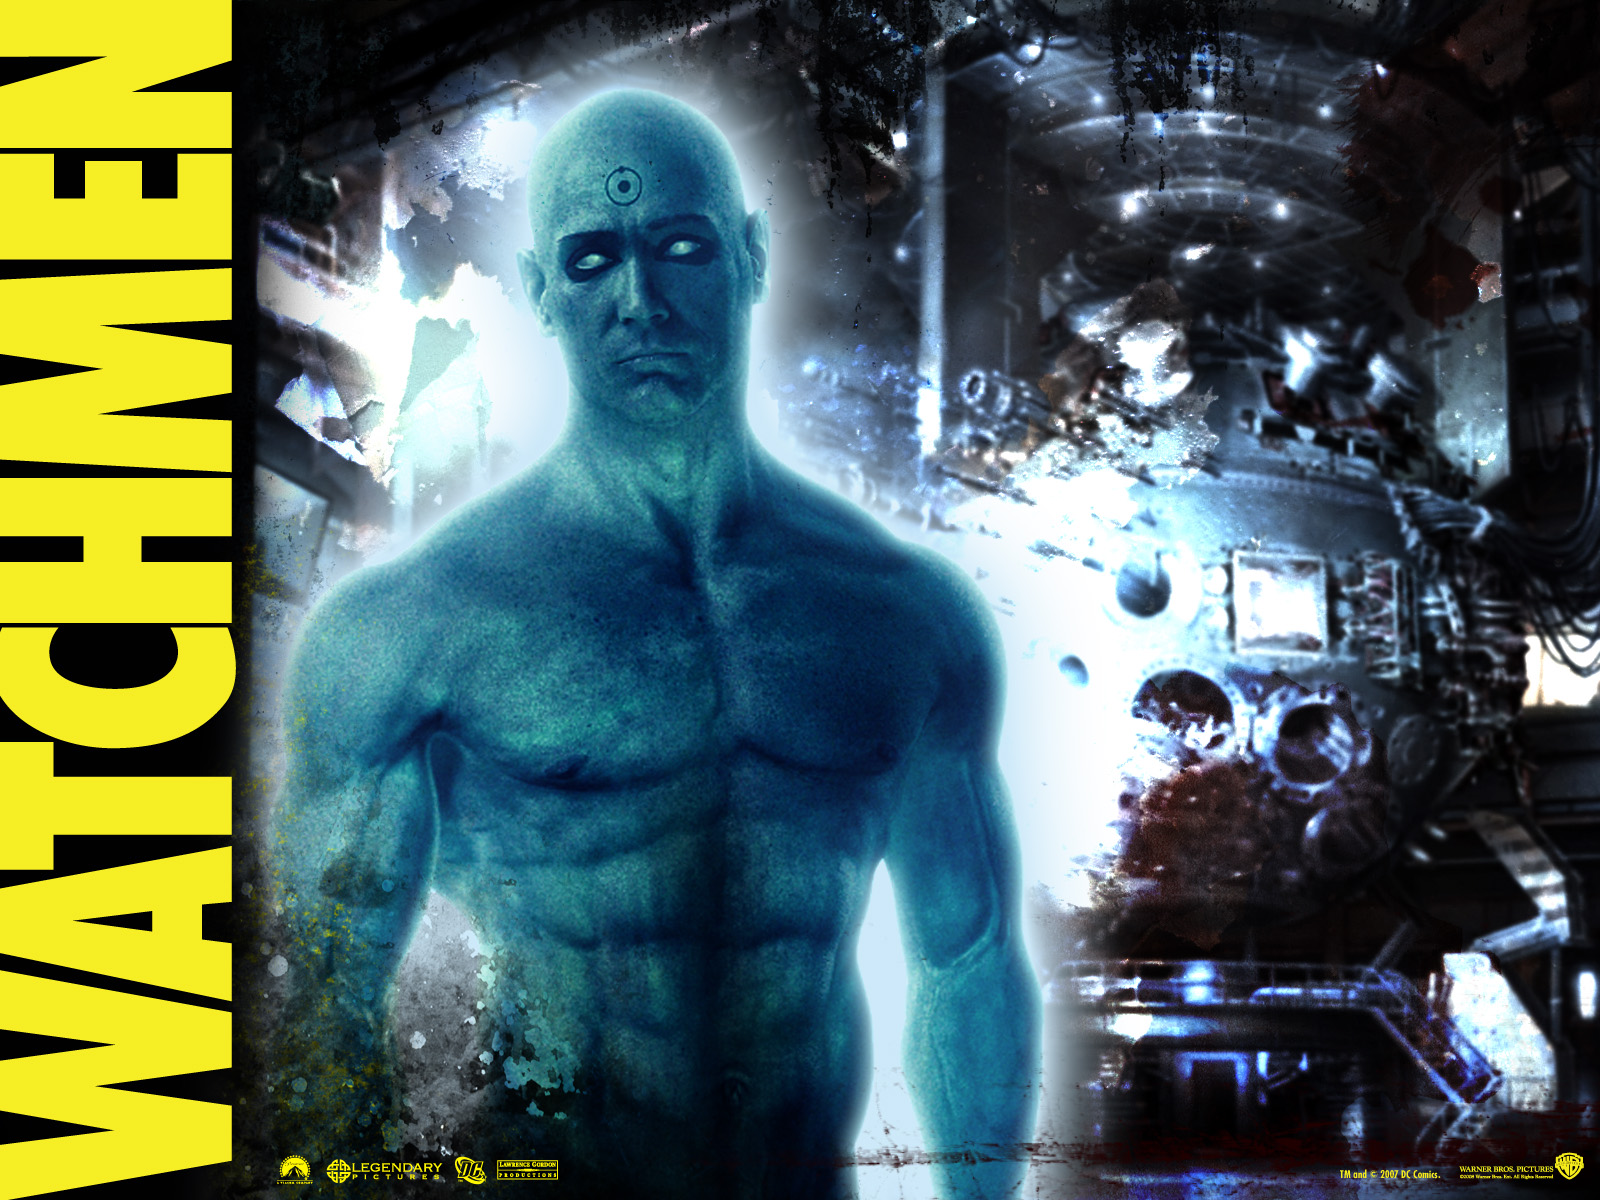 Download full size Watchmen wallpaper / Movies / 1600x1200